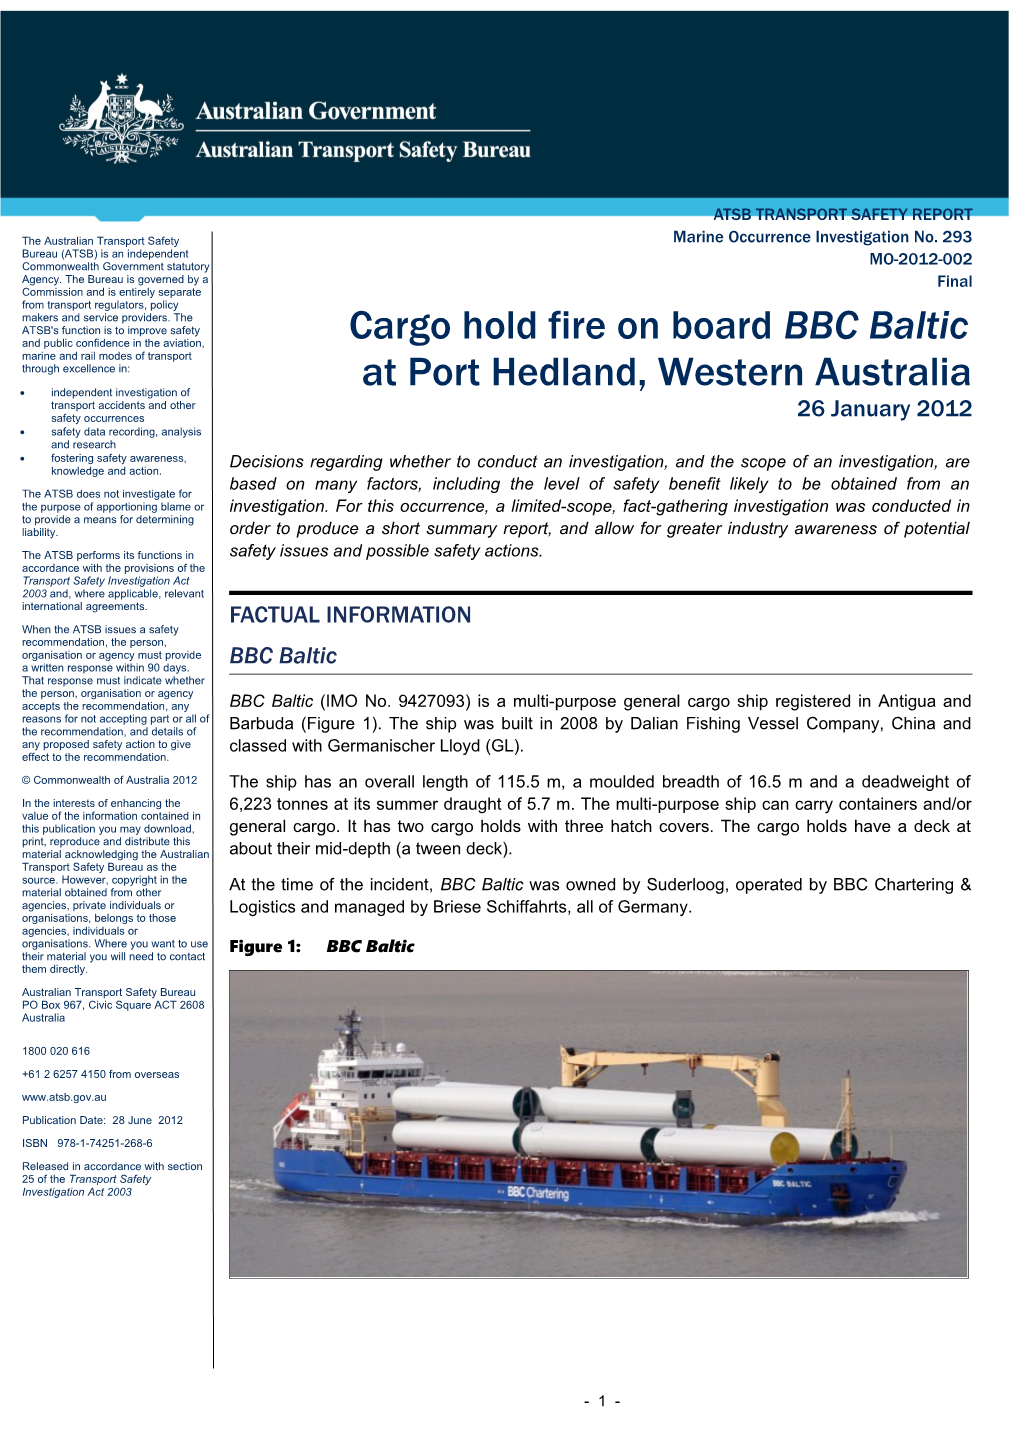 Cargo Hold Fireon Board BBC Baltic